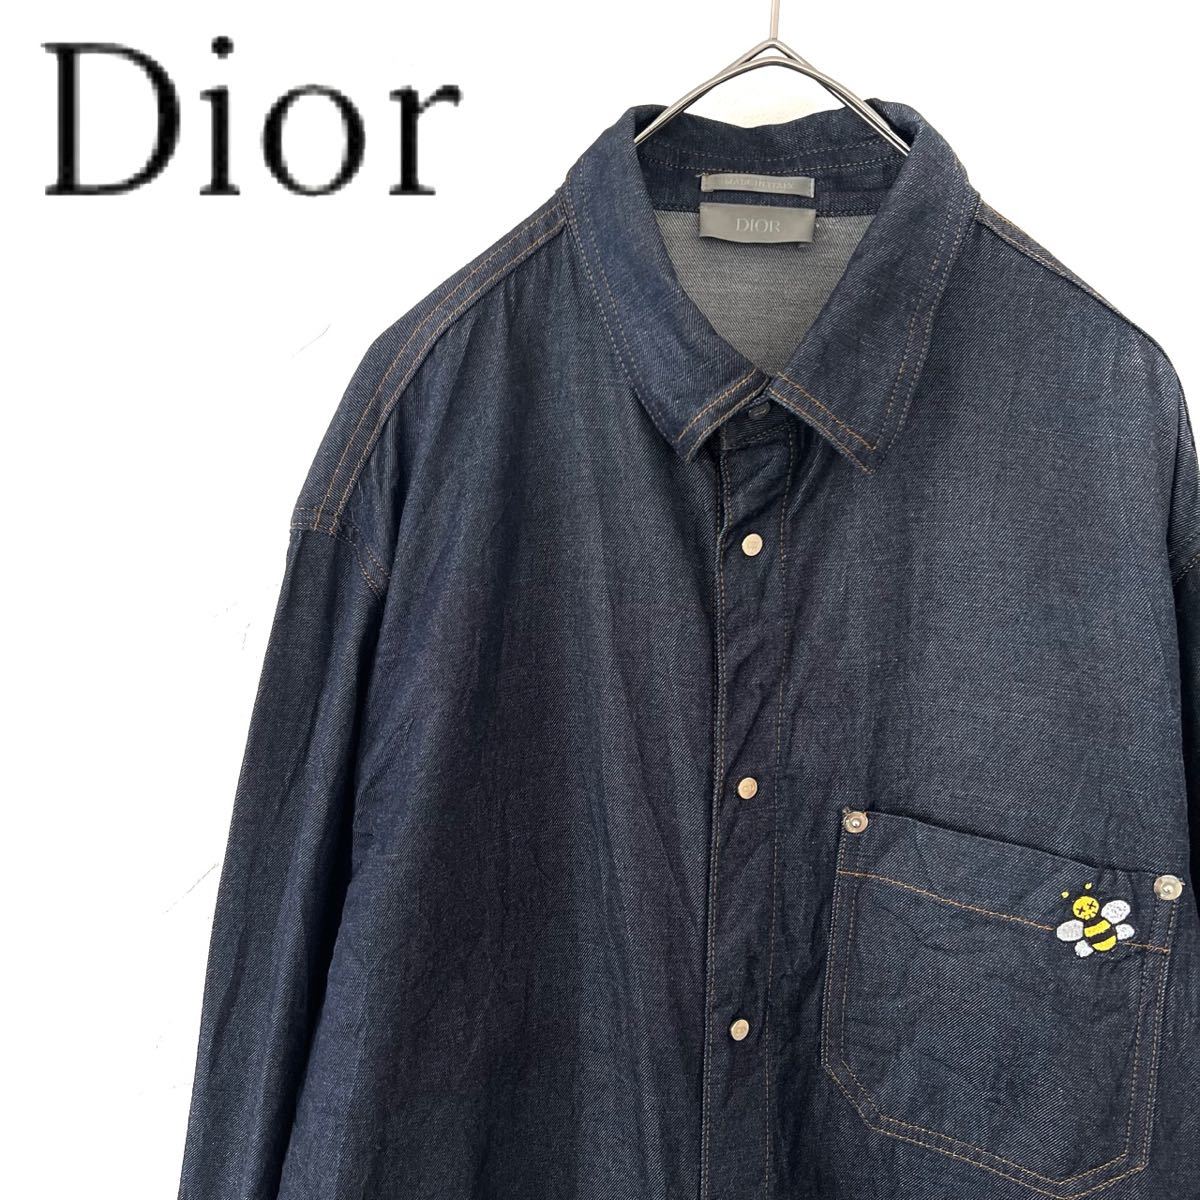 [ free shipping ]dior Dior kaws Kaws limitation collaboration Denim shirt men's M 19aw bee bee bee long sleeve rare goods rare 